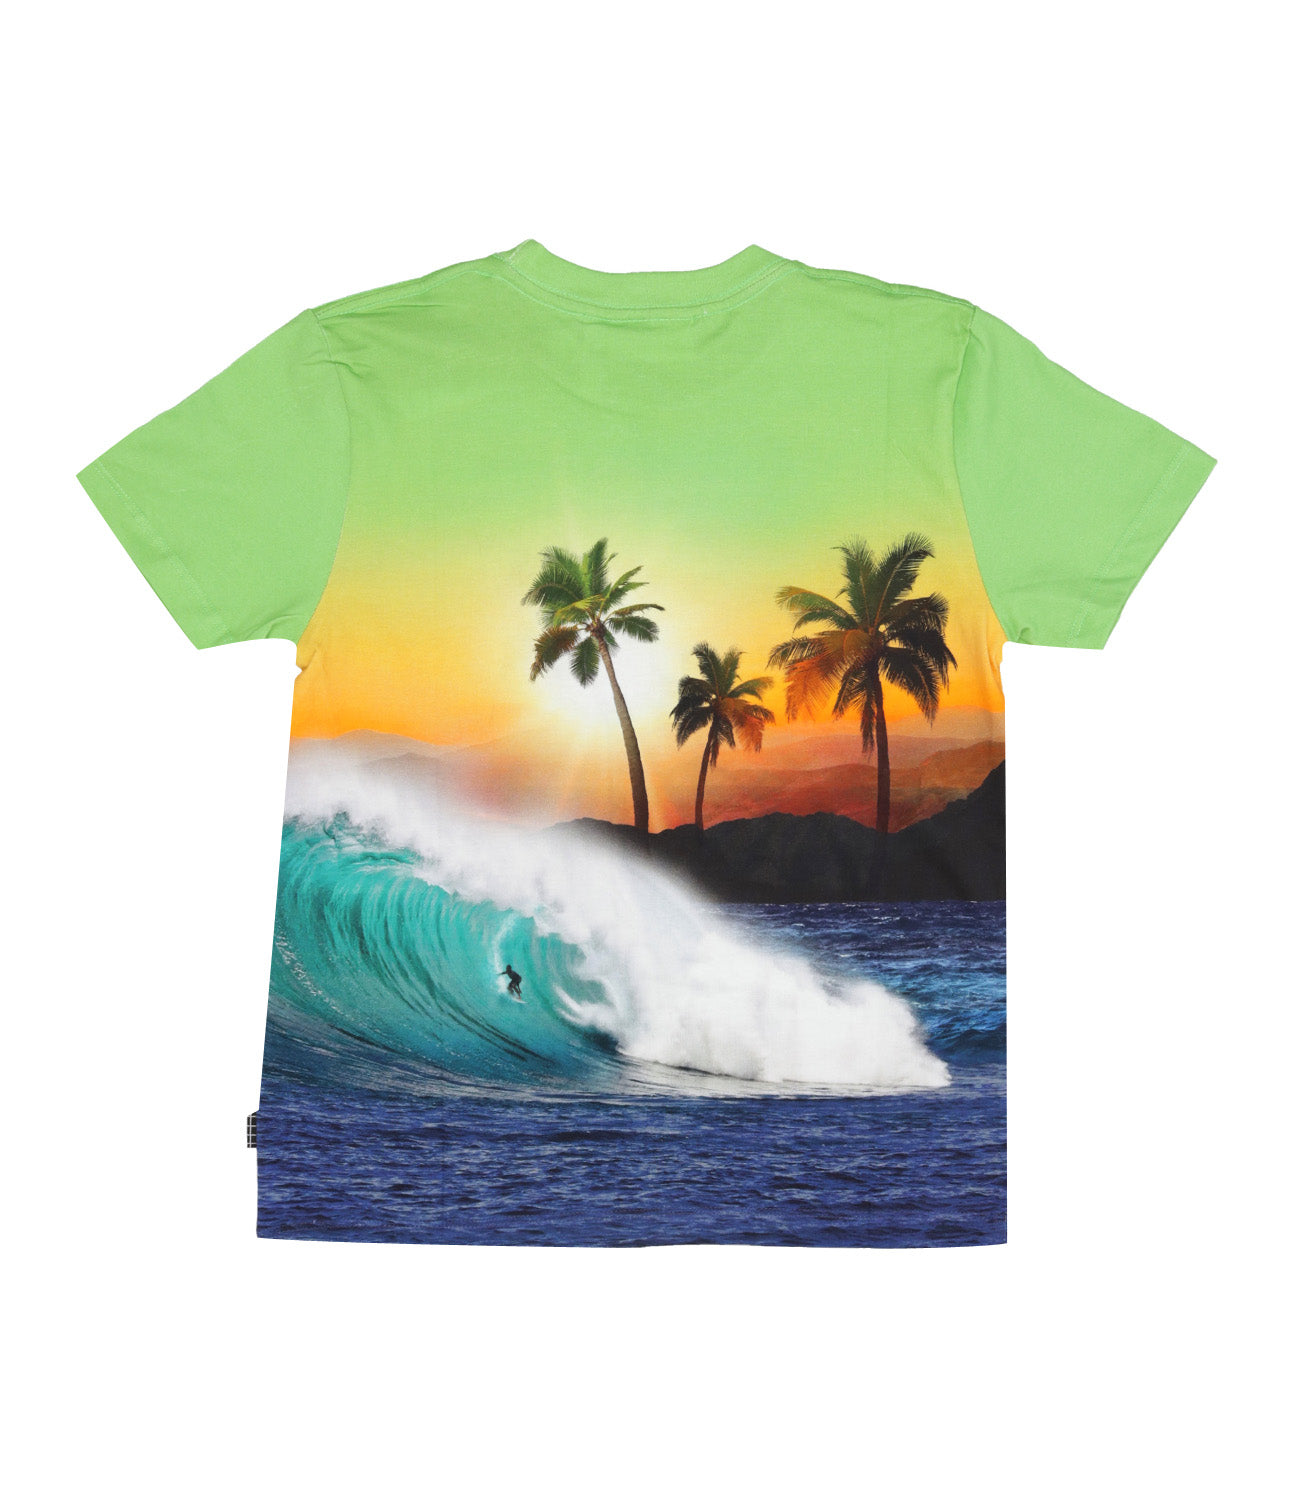 Molo | T-Shirt Roxo Green